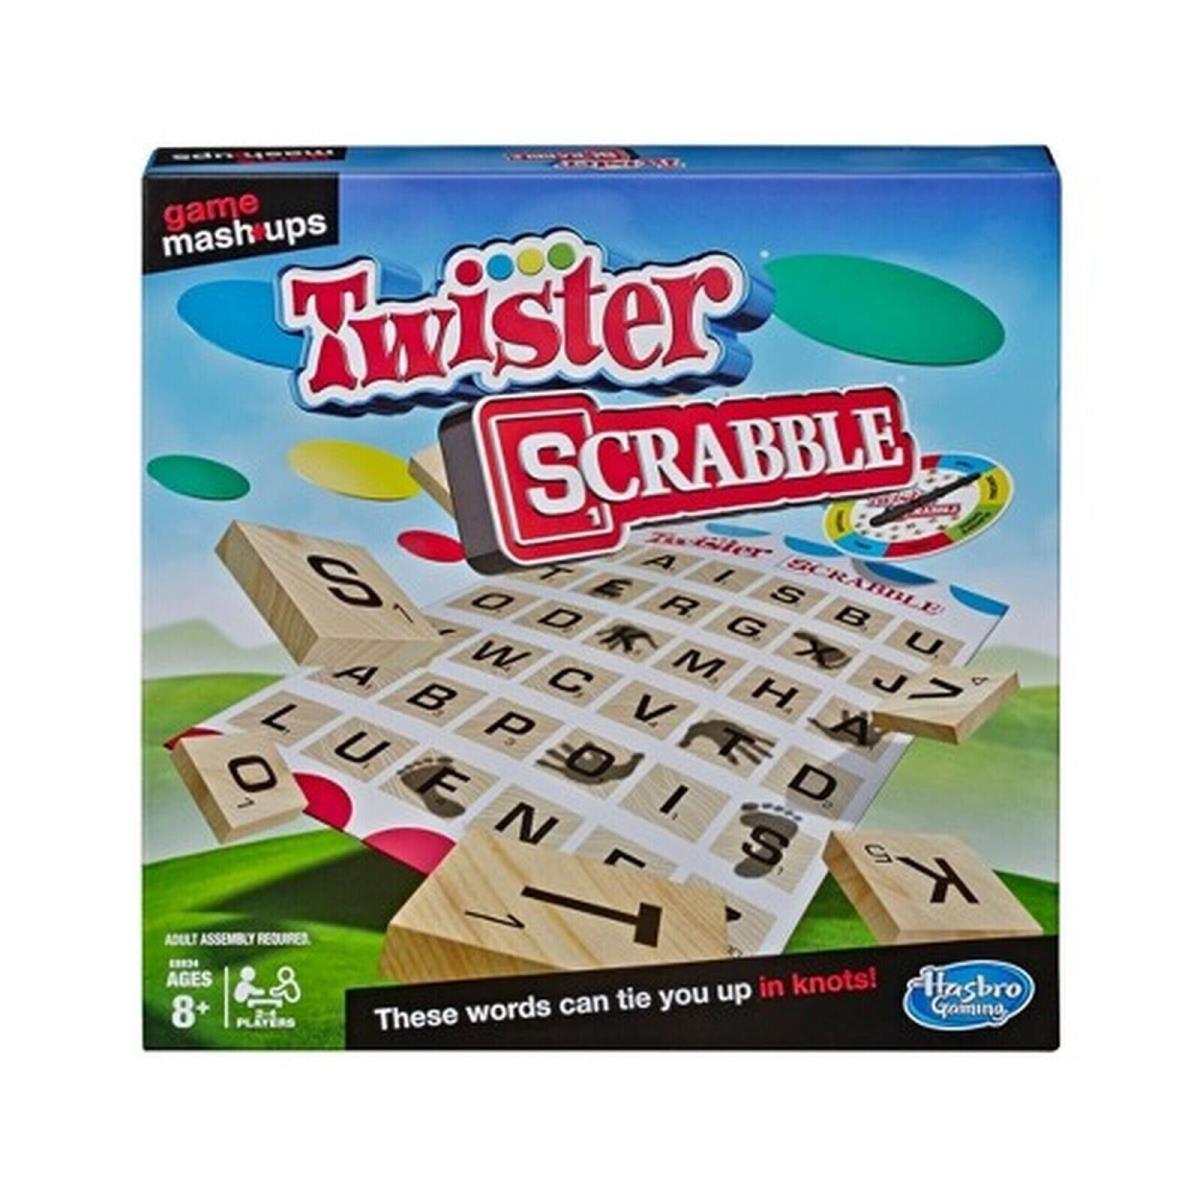 Game Mashups Twister Scrabble Game